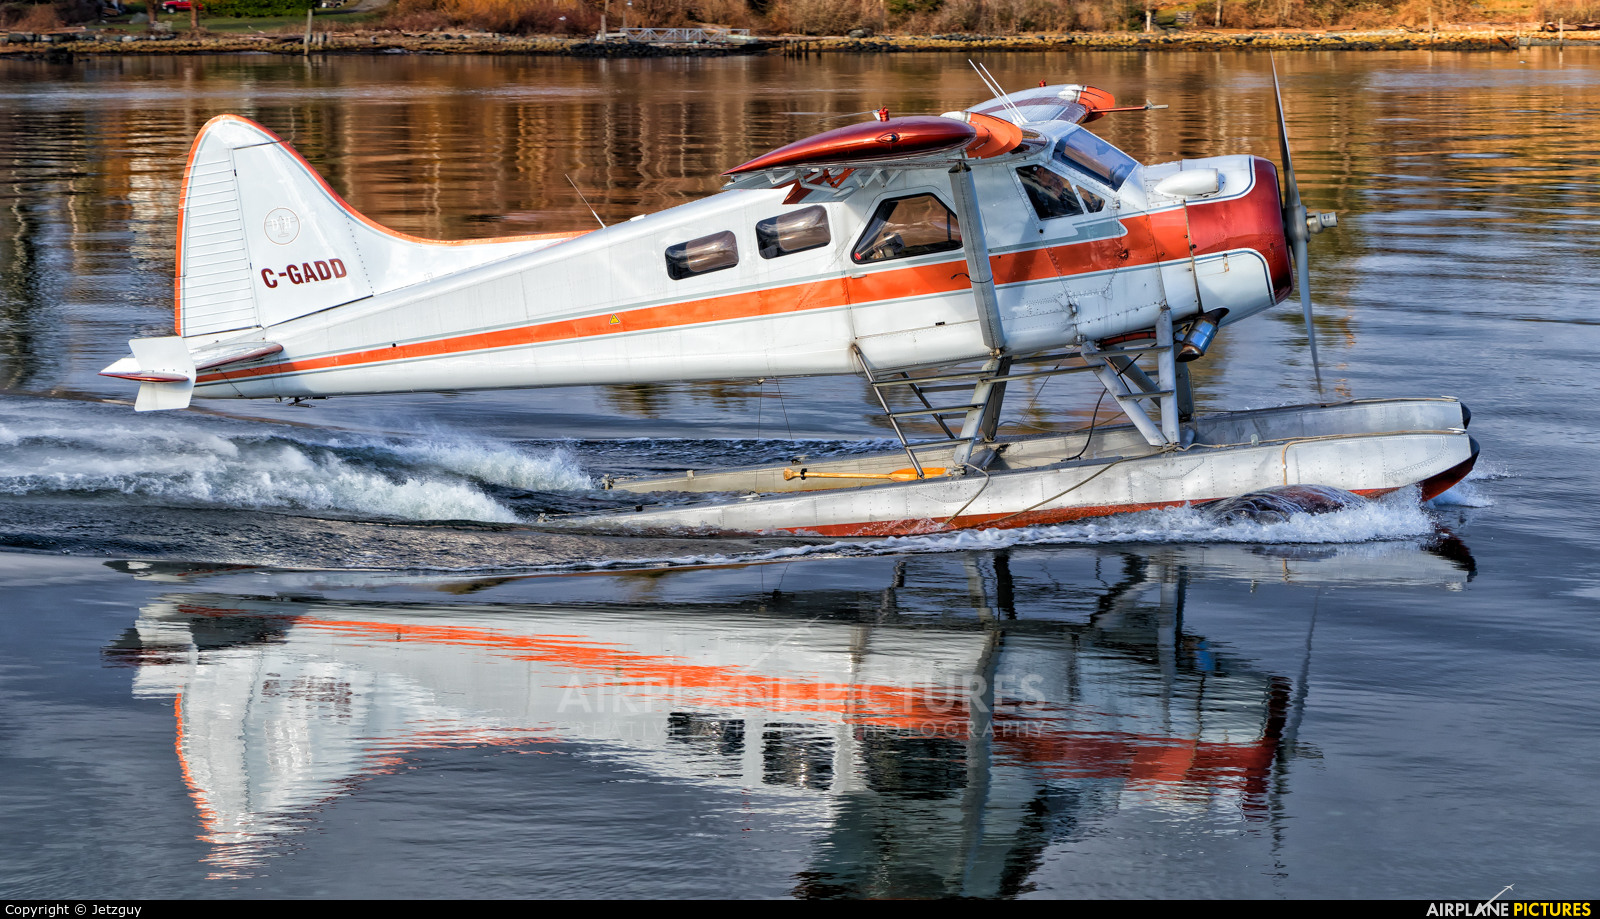 Corilair C-GADD aircraft at Campbell River Seaplane Base